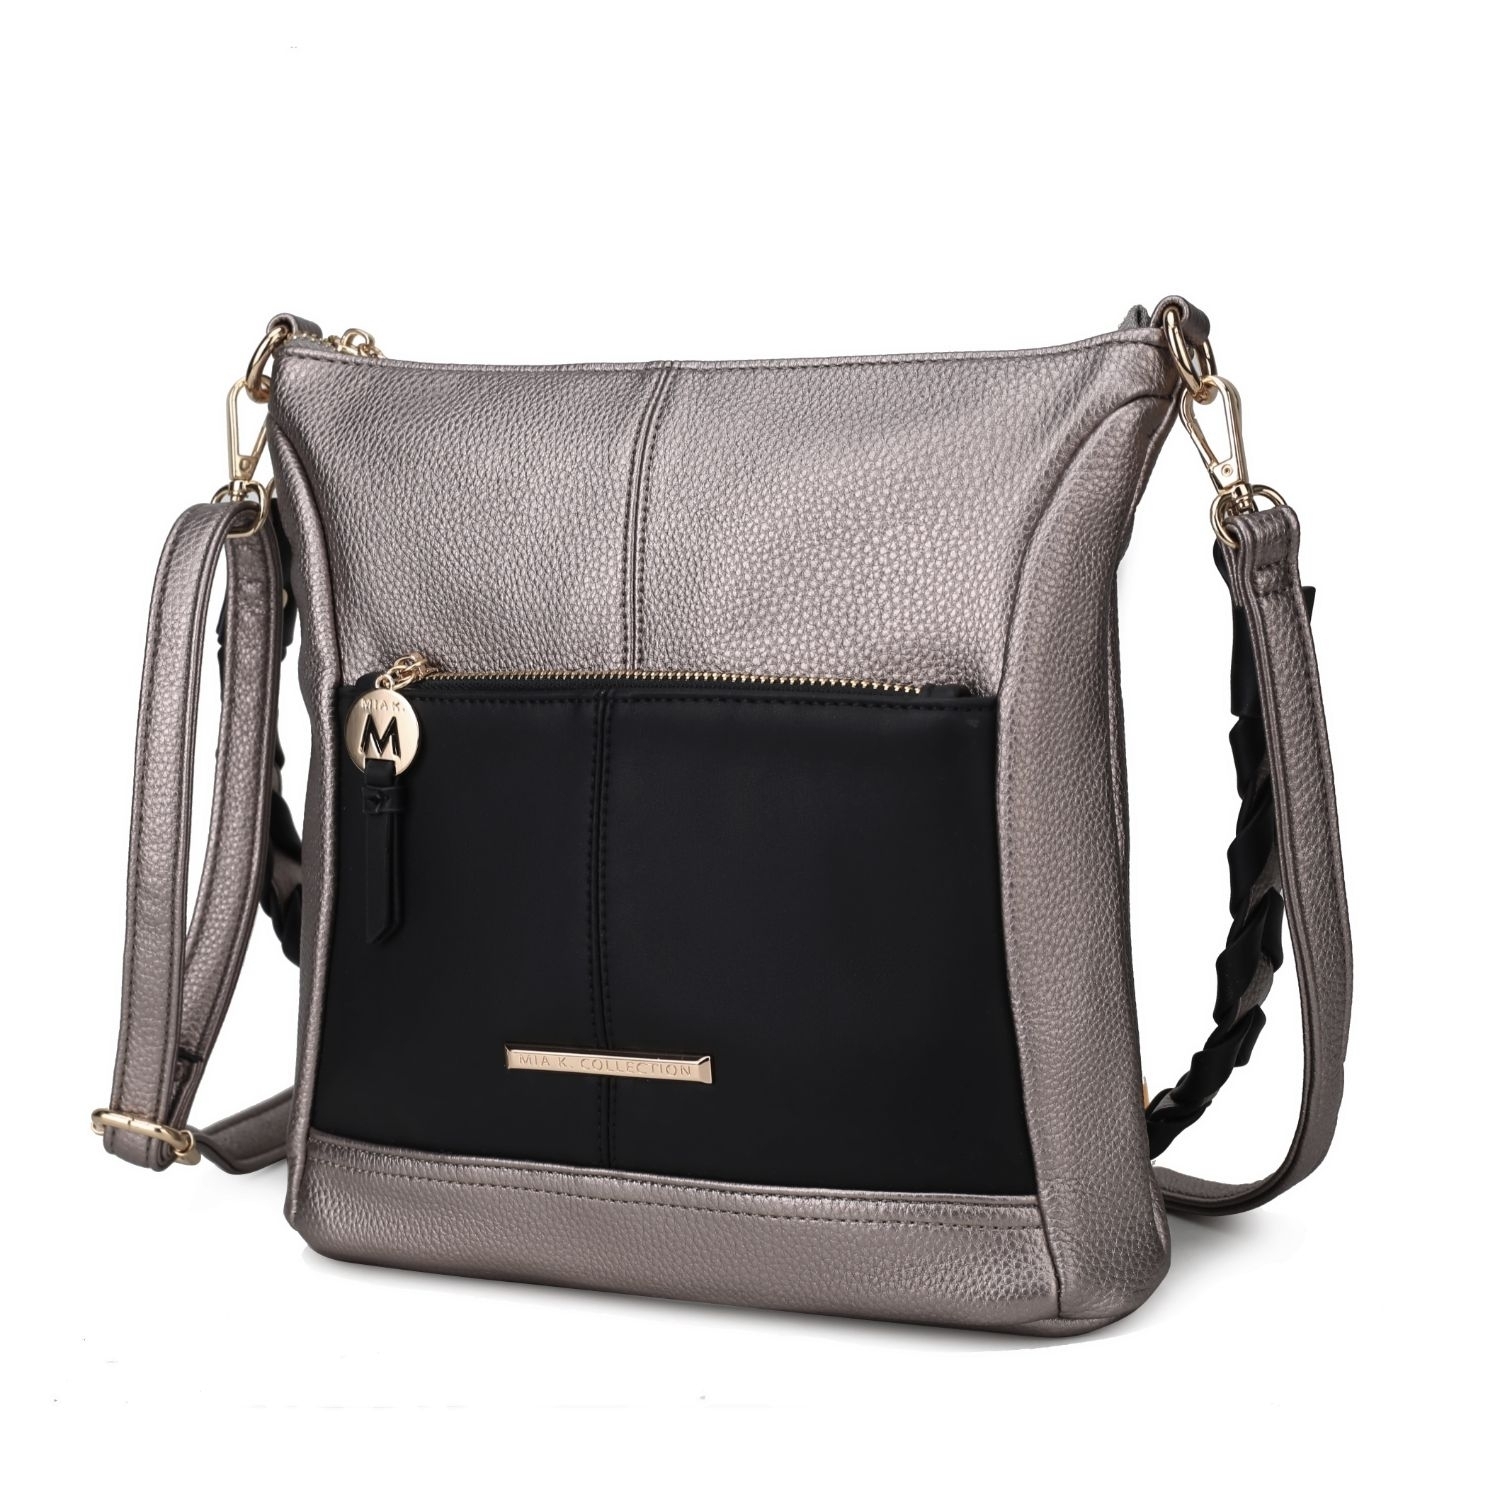 MKF Collection Nala Vegan Color-block Leather Women's Shoulder Handbag By Mia K. - Pewter- Black